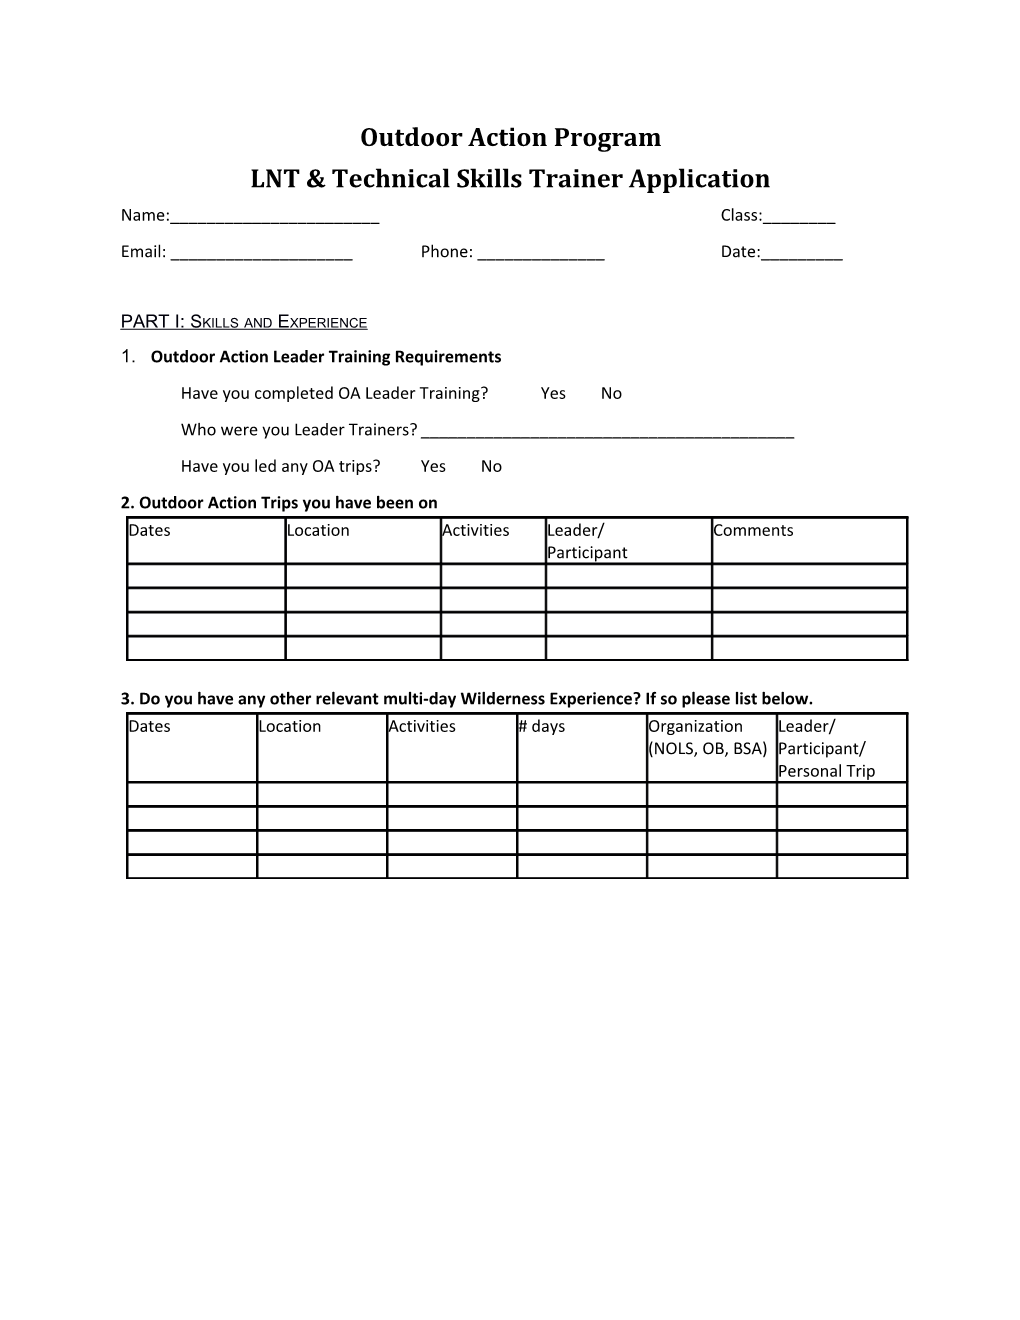 LNT & Technical Skills Trainer Application